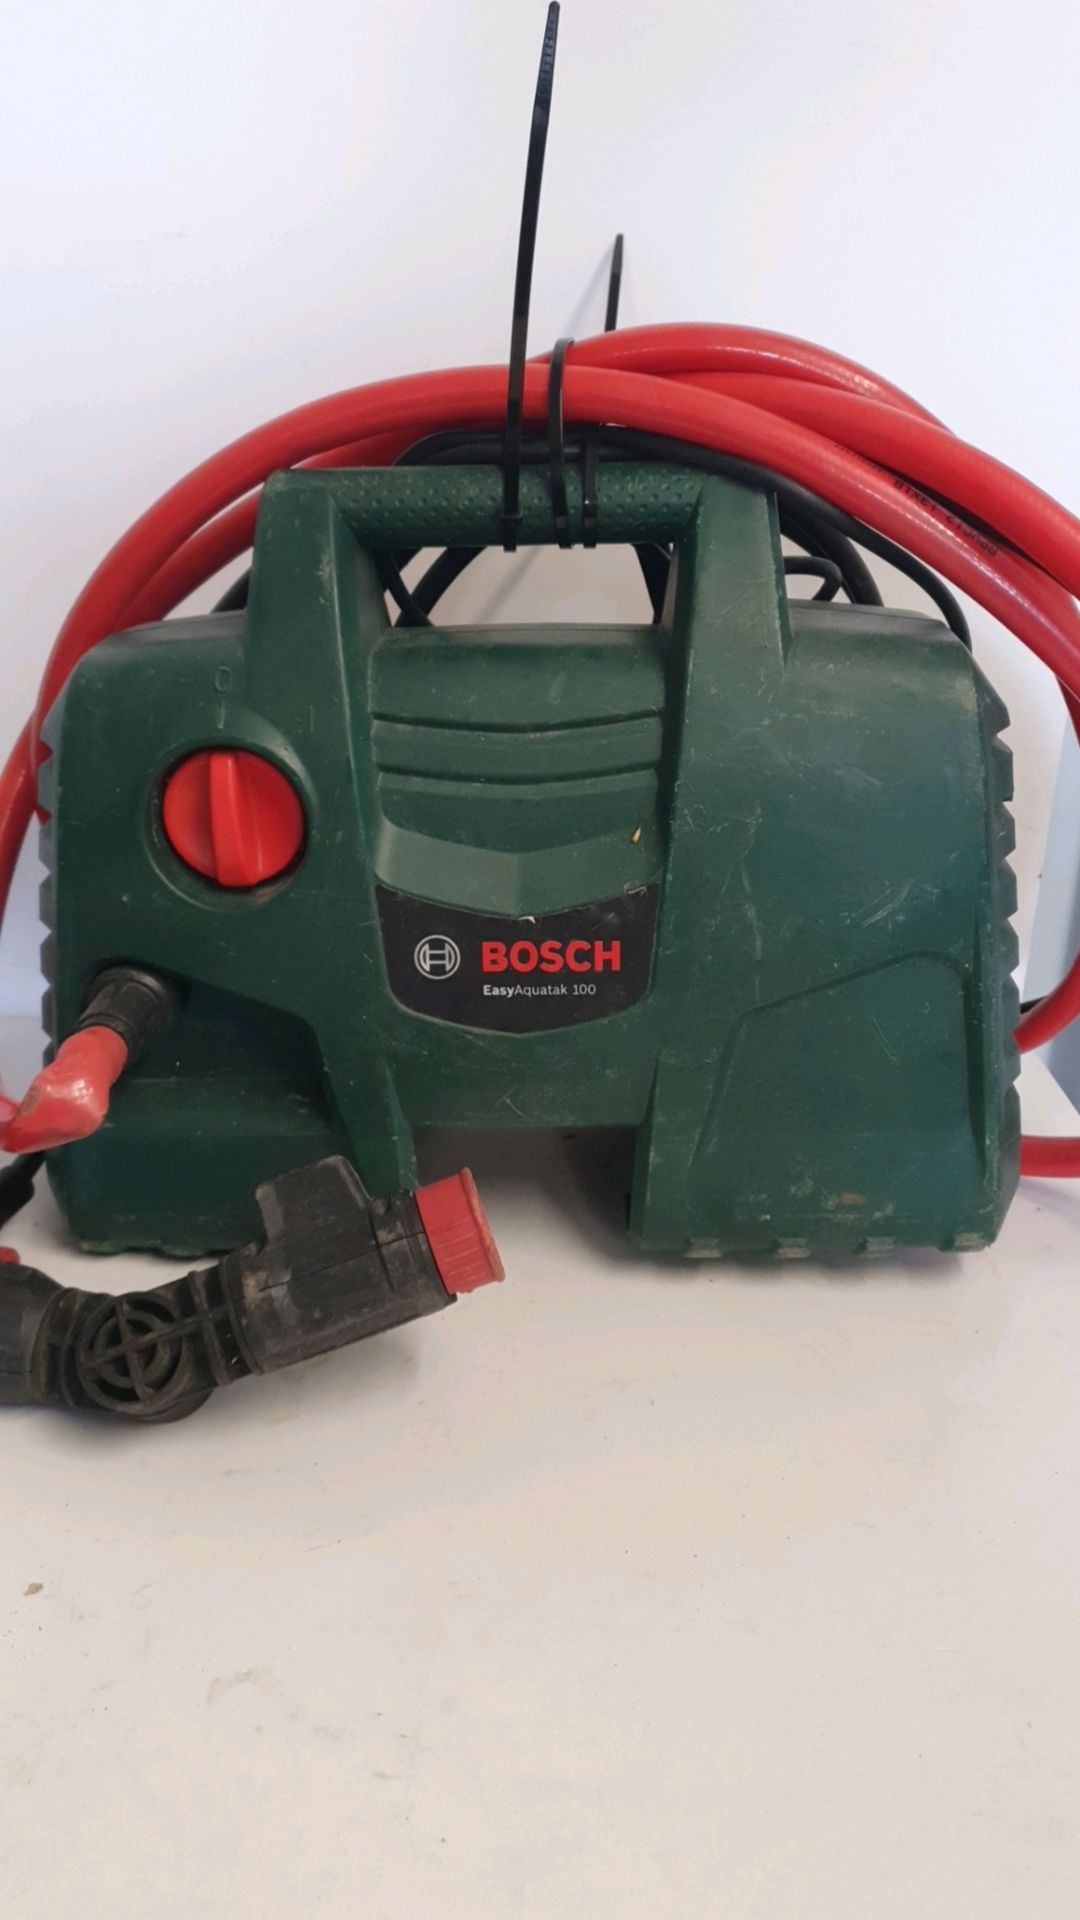 Bosch Easy AquaTek 100 High Pressure Washer - Image 4 of 4